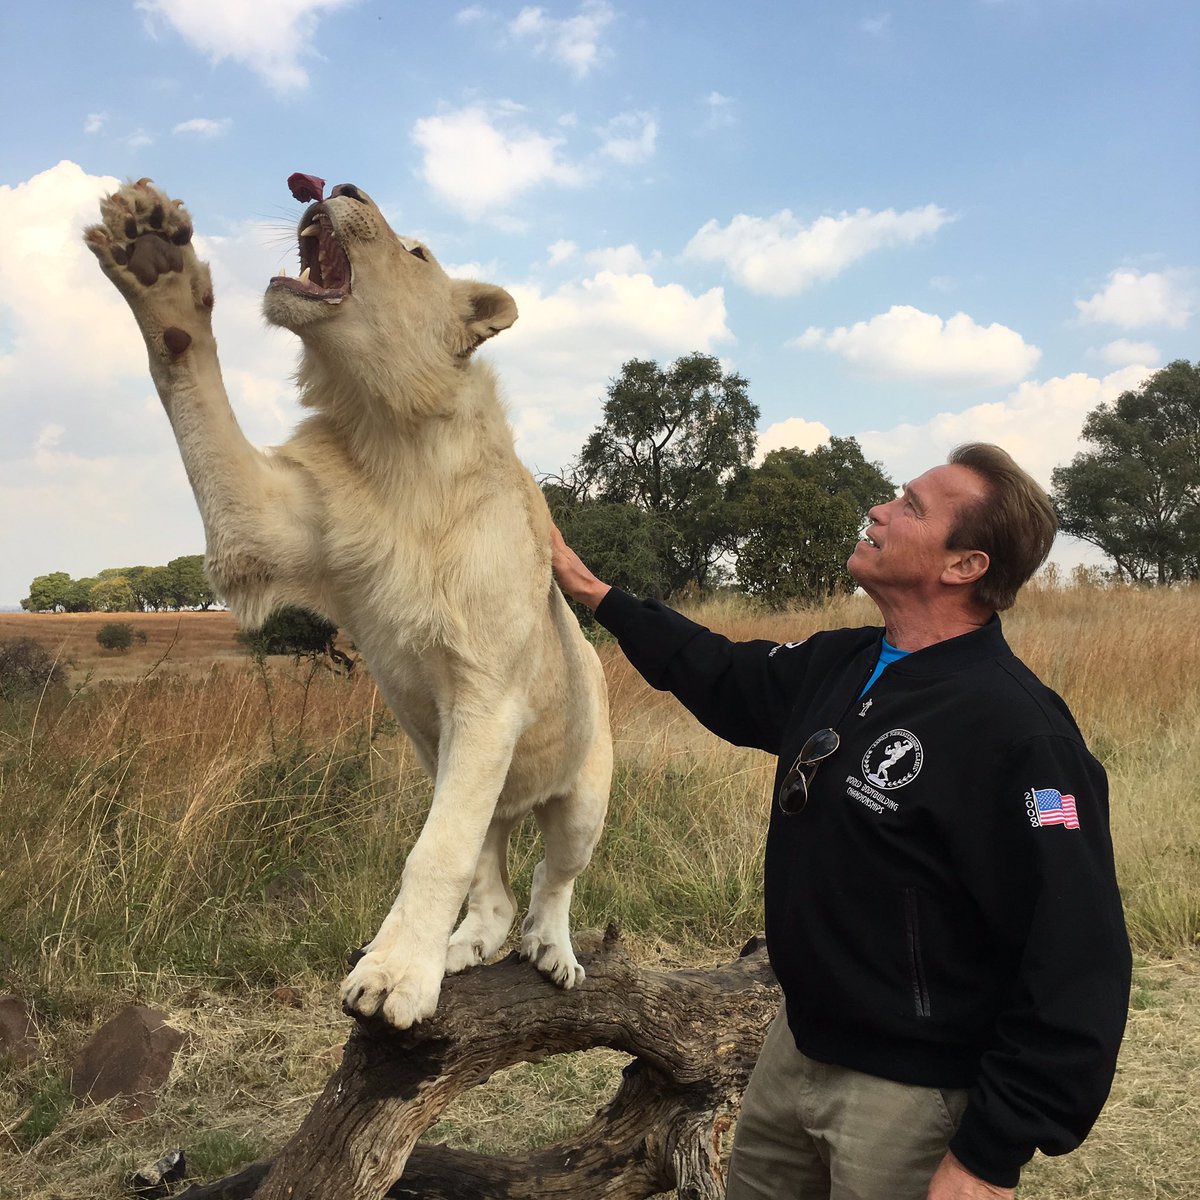 WAIT! This lion is stealing my protein! https://t.co/Do3gyHbiGU